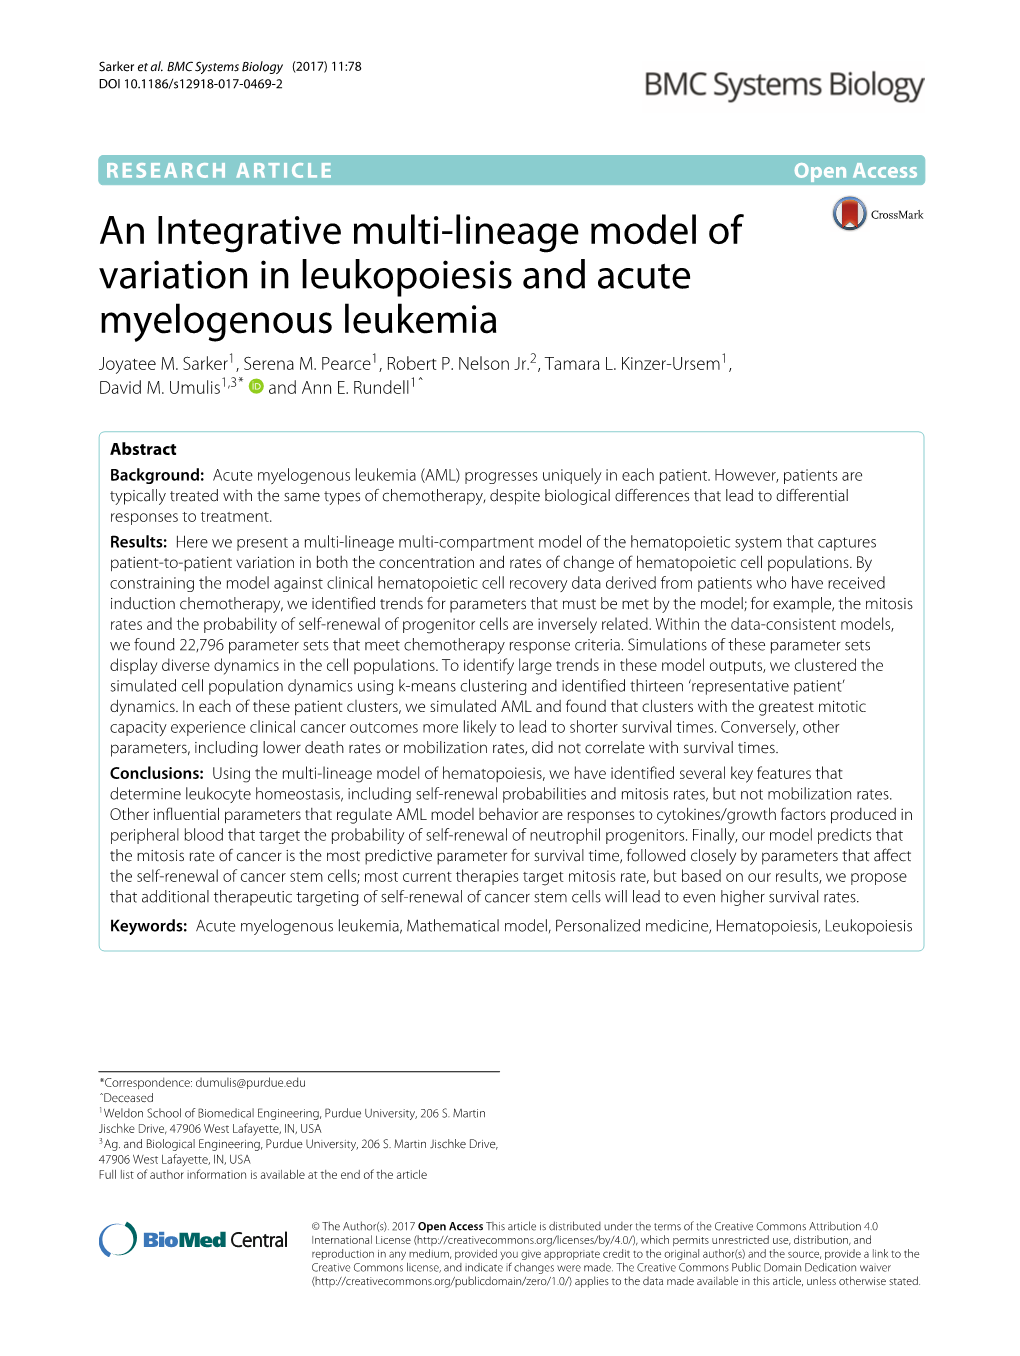 An Integrative Multi-Lineage Model of Variation in Leukopoiesis and Acute Myelogenous Leukemia Joyatee M